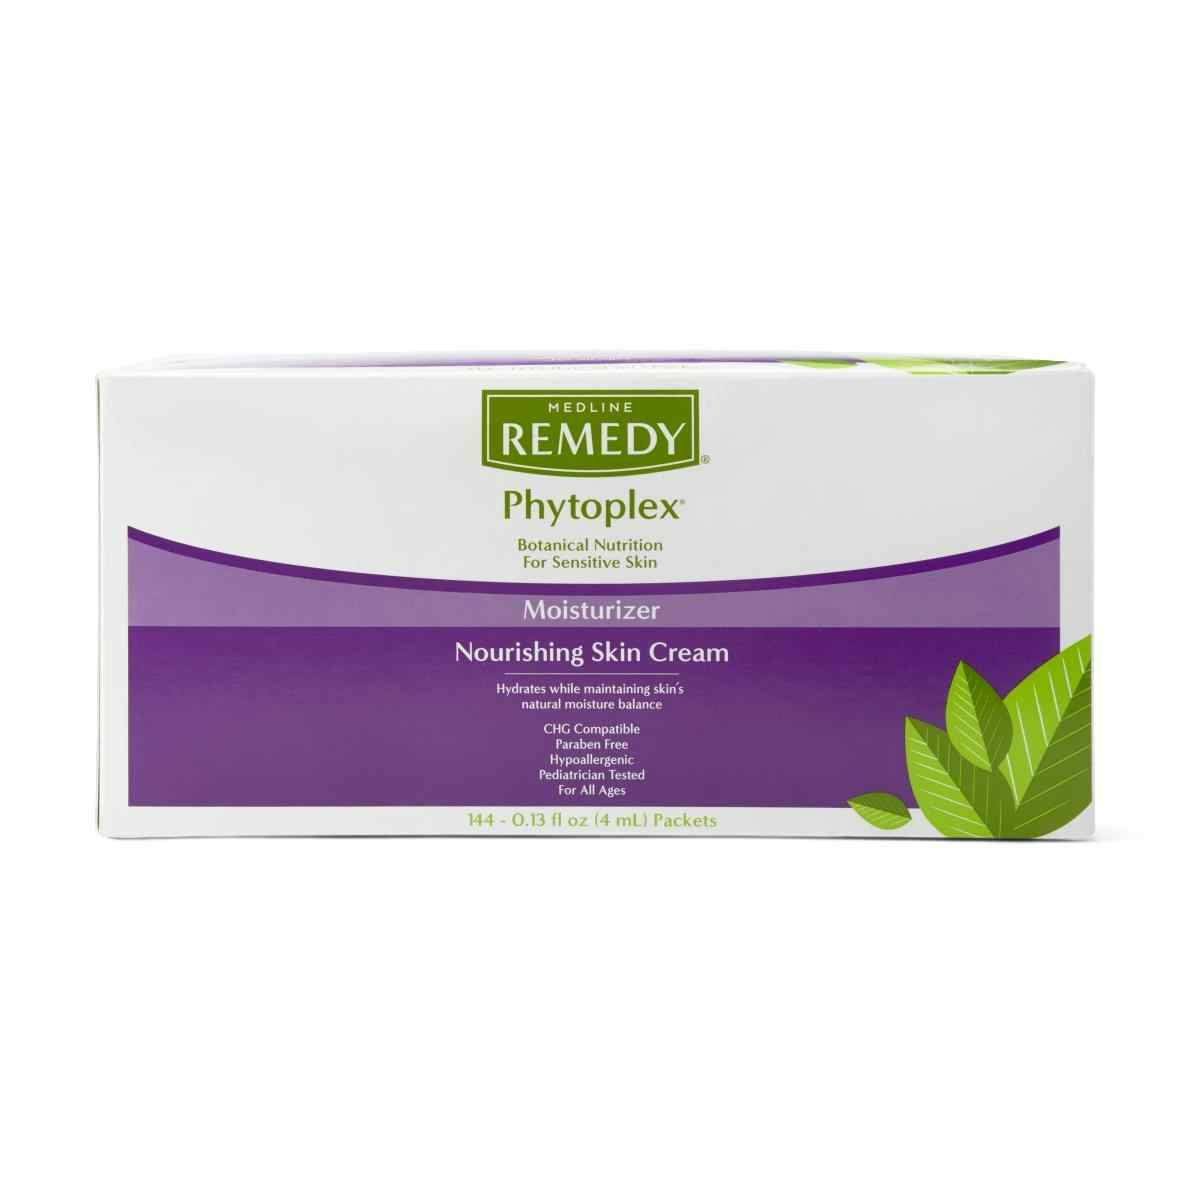 Medline Remedy Phytoplex Nourishing Skin Cream Moisturizer, 4 ml, MSC092402PACK, 4 ml - 144 packets